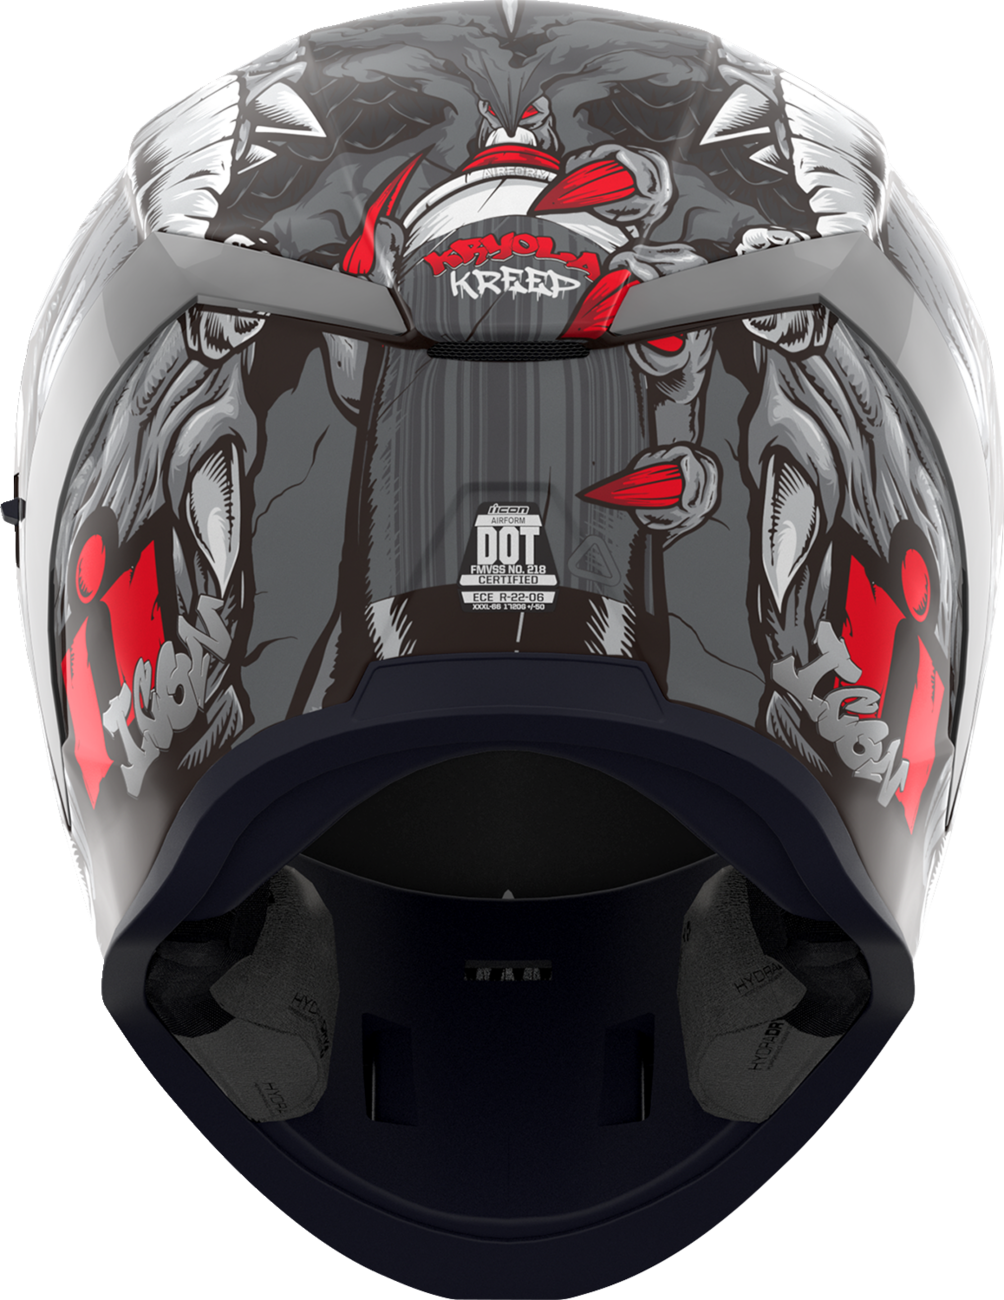 ICON Airform™ Helmet - Kryola Kreep - MIPS® - Silver - 3XL 0101-16959